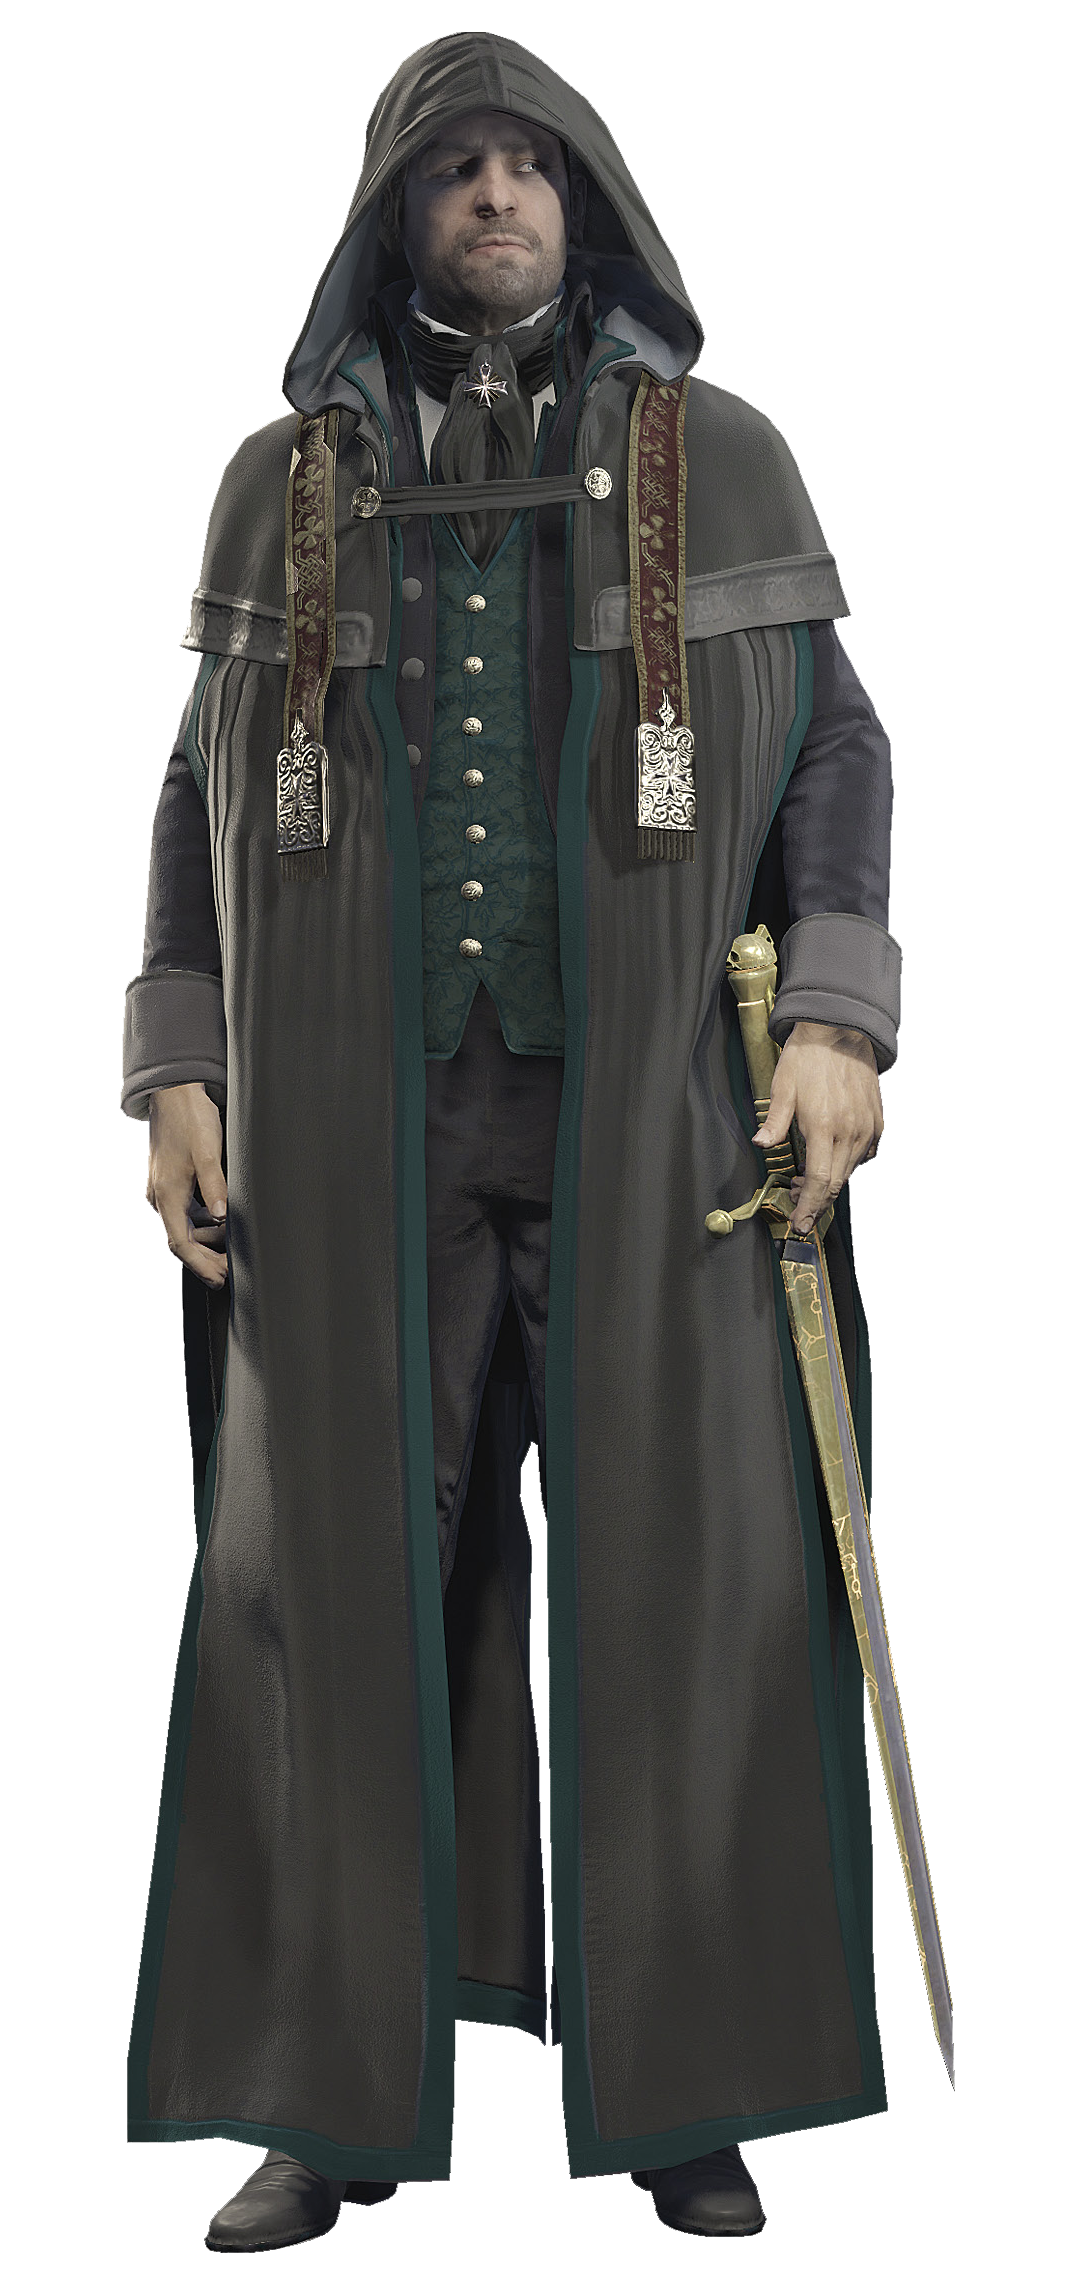 Arno Dorian, Assassin's Creed Wiki